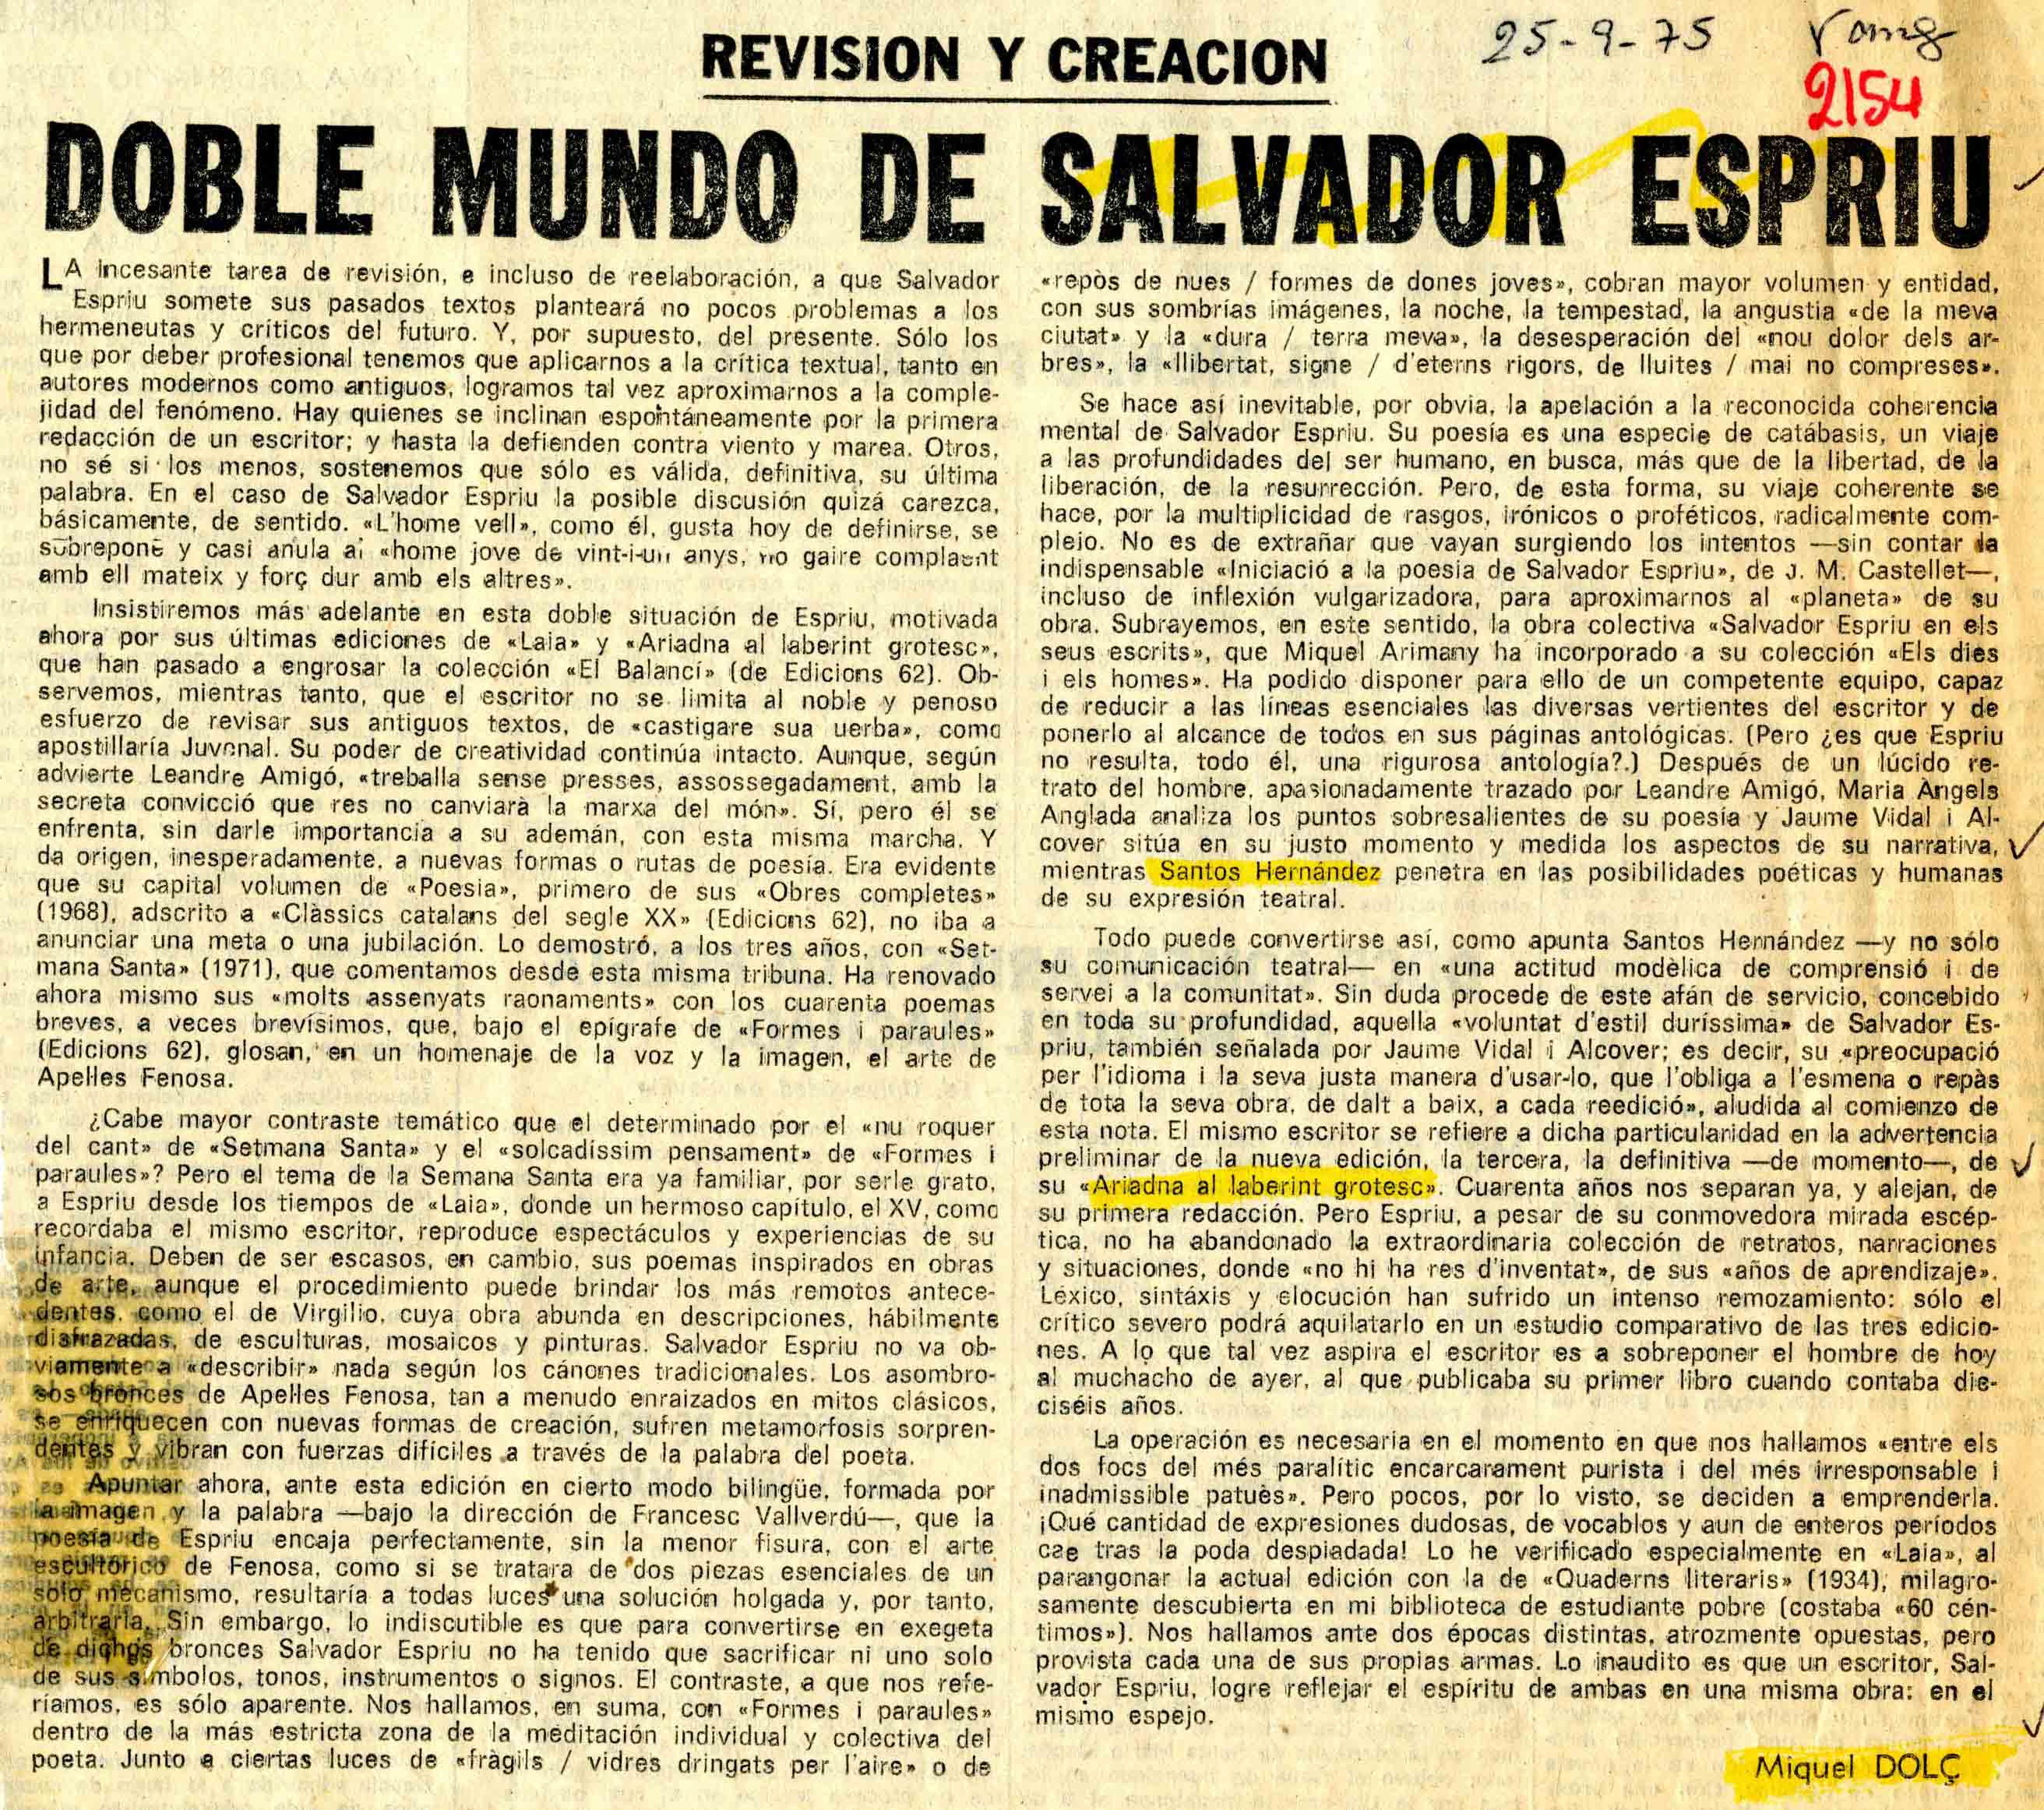 Dolç, Miquel. Doble mundo de Salvador Espriu. La Vanguardia, 25/09/1975